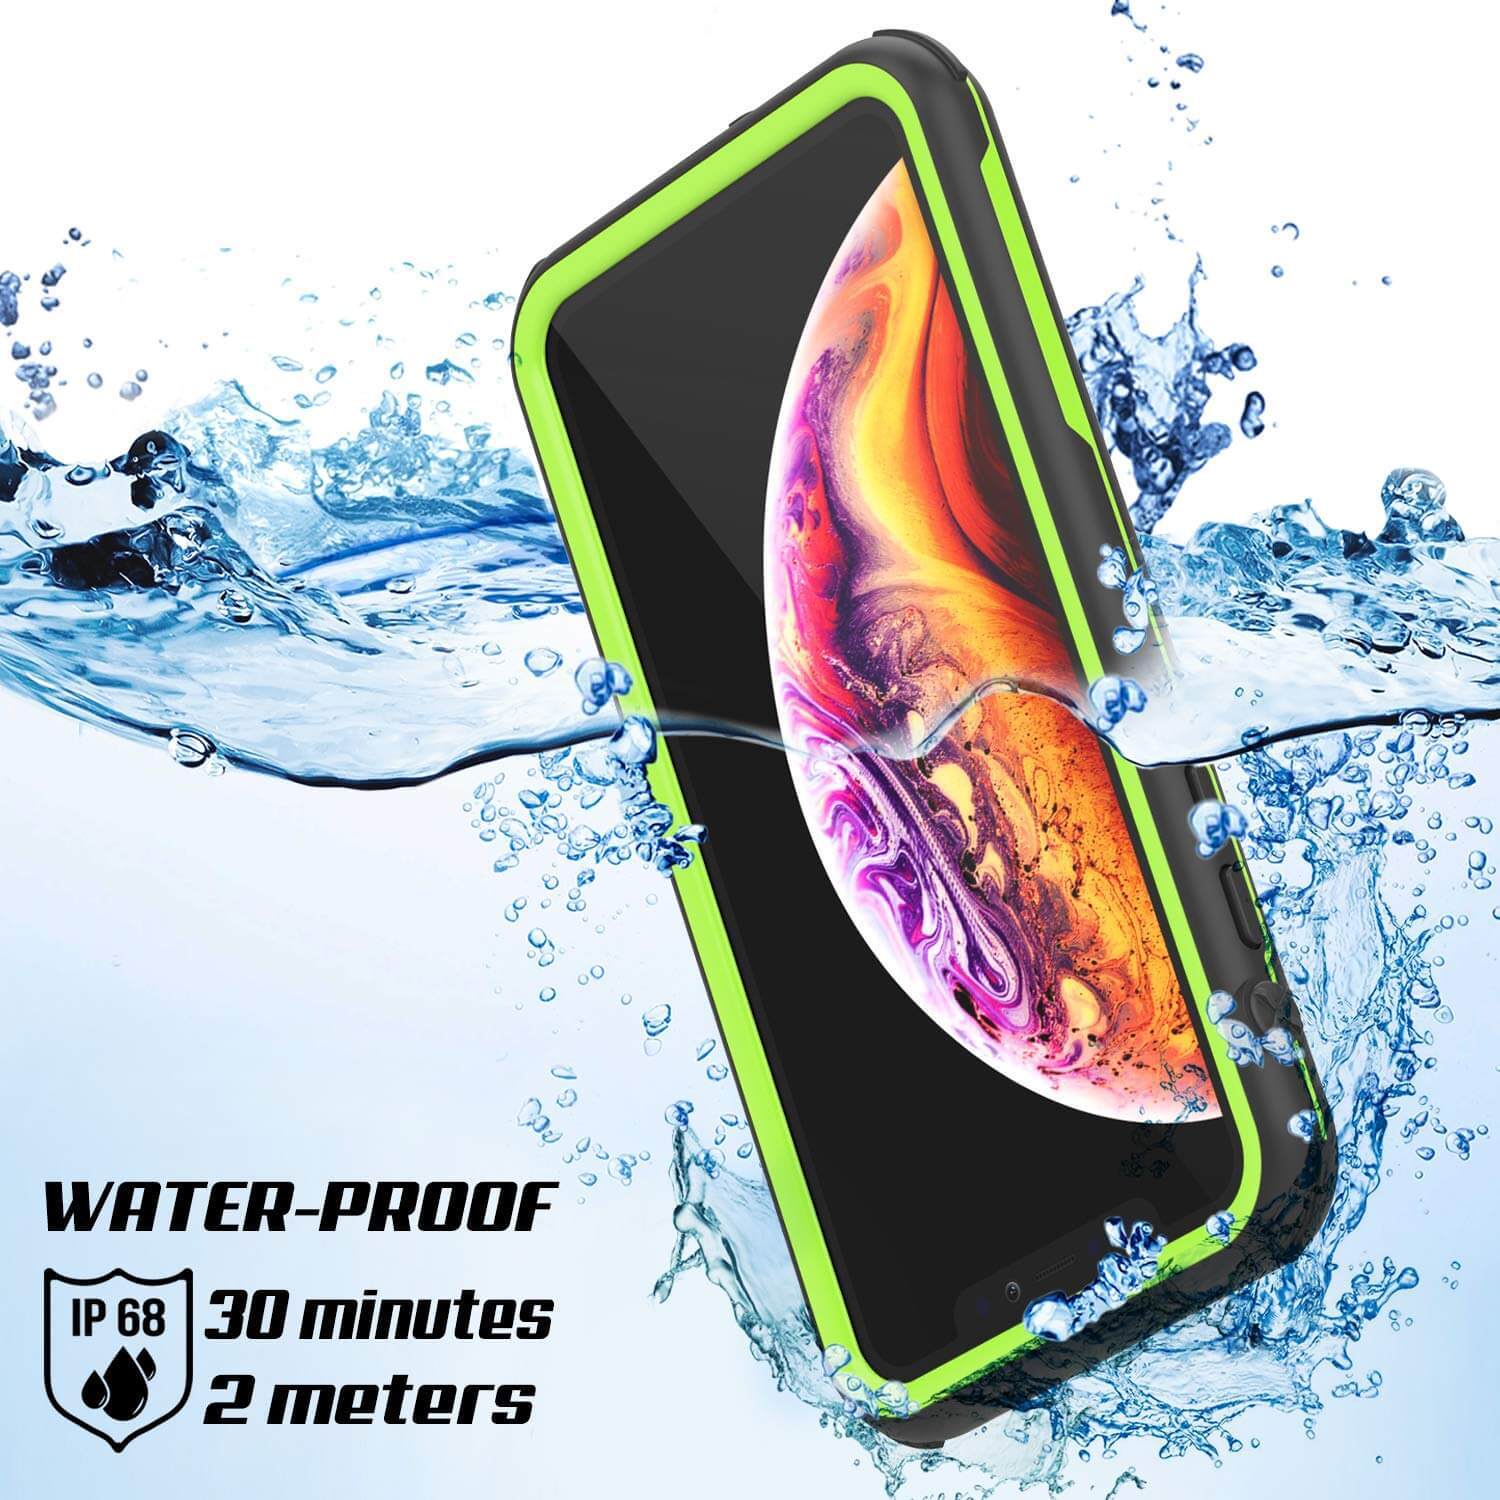 iPhone XS Waterproof IP68 Case, Punkcase [Green] [Rapture Series]  W/Built in Screen Protector